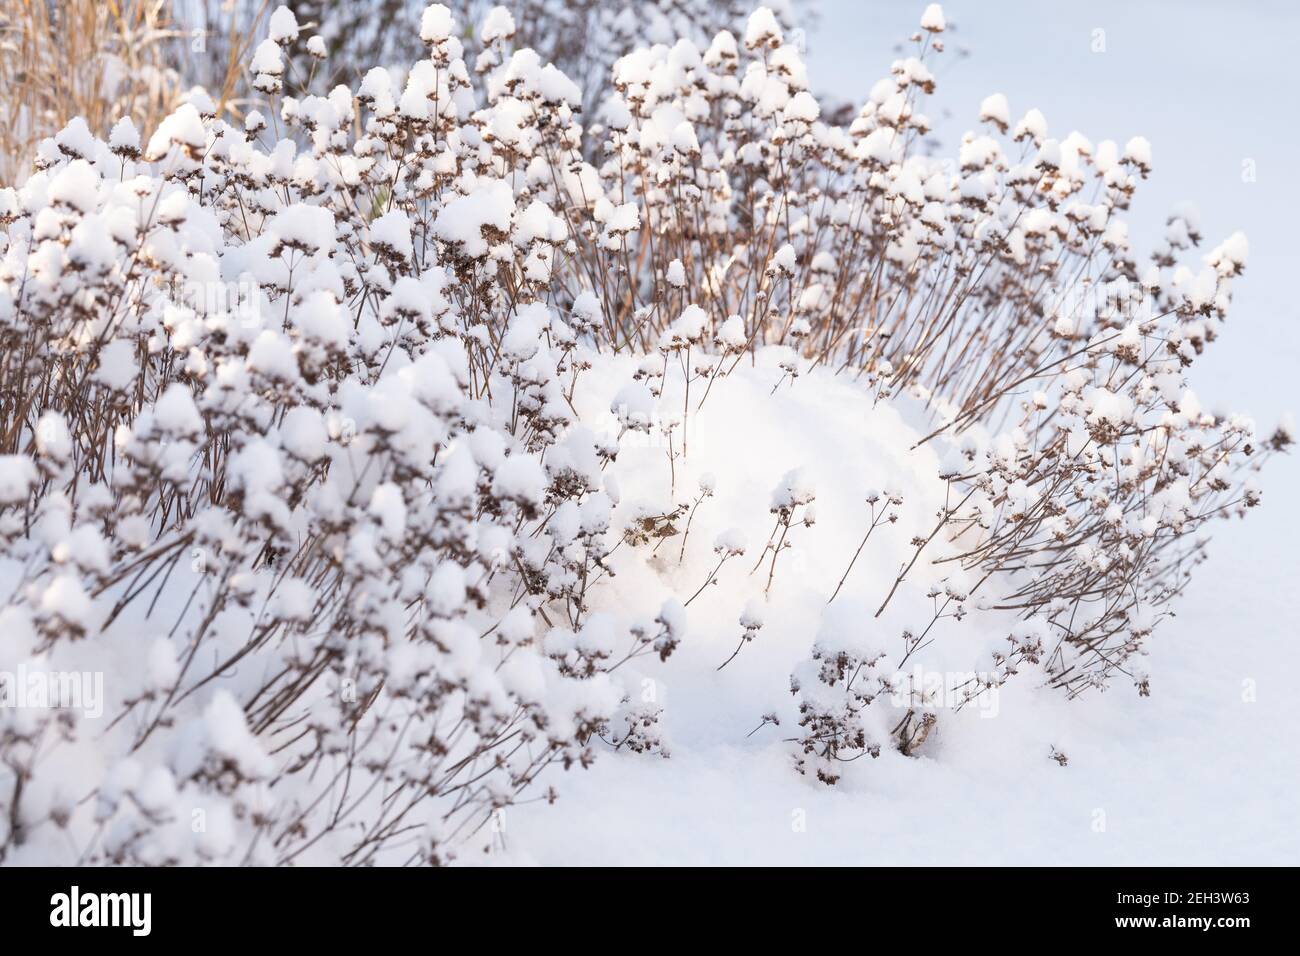 Marjoram (origanum majorana) plant and seedheads covered in snow in winter garden - Scotland, UK Stock Photo